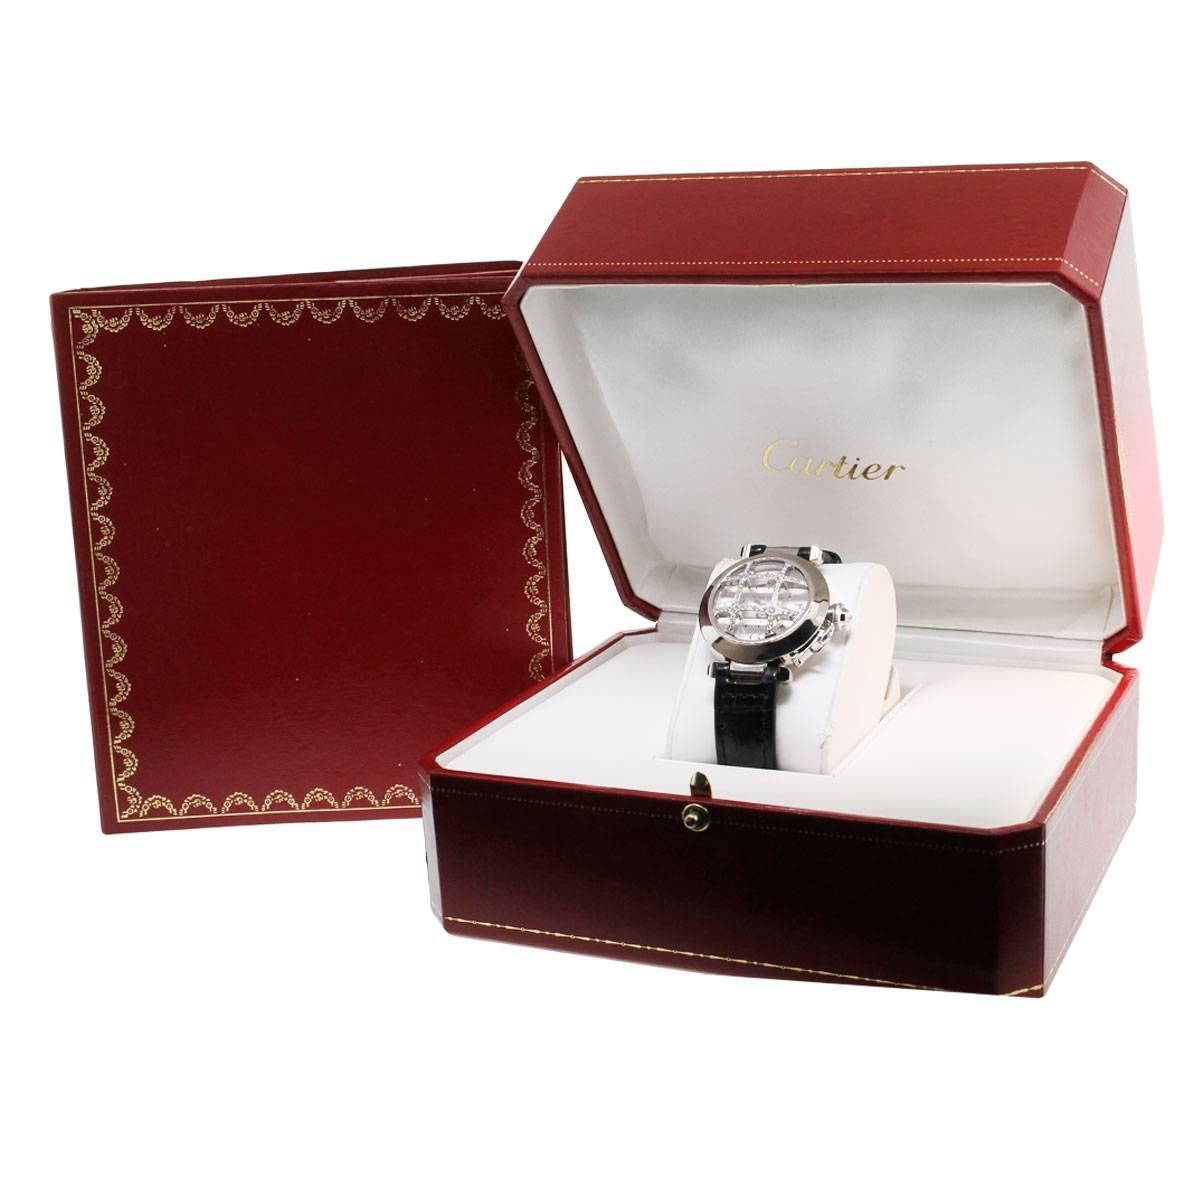 Brilliant Cut Cartier 2529 Pasha de Cartier Diamond Grill Automatic Watch 18 Karat in Stock For Sale